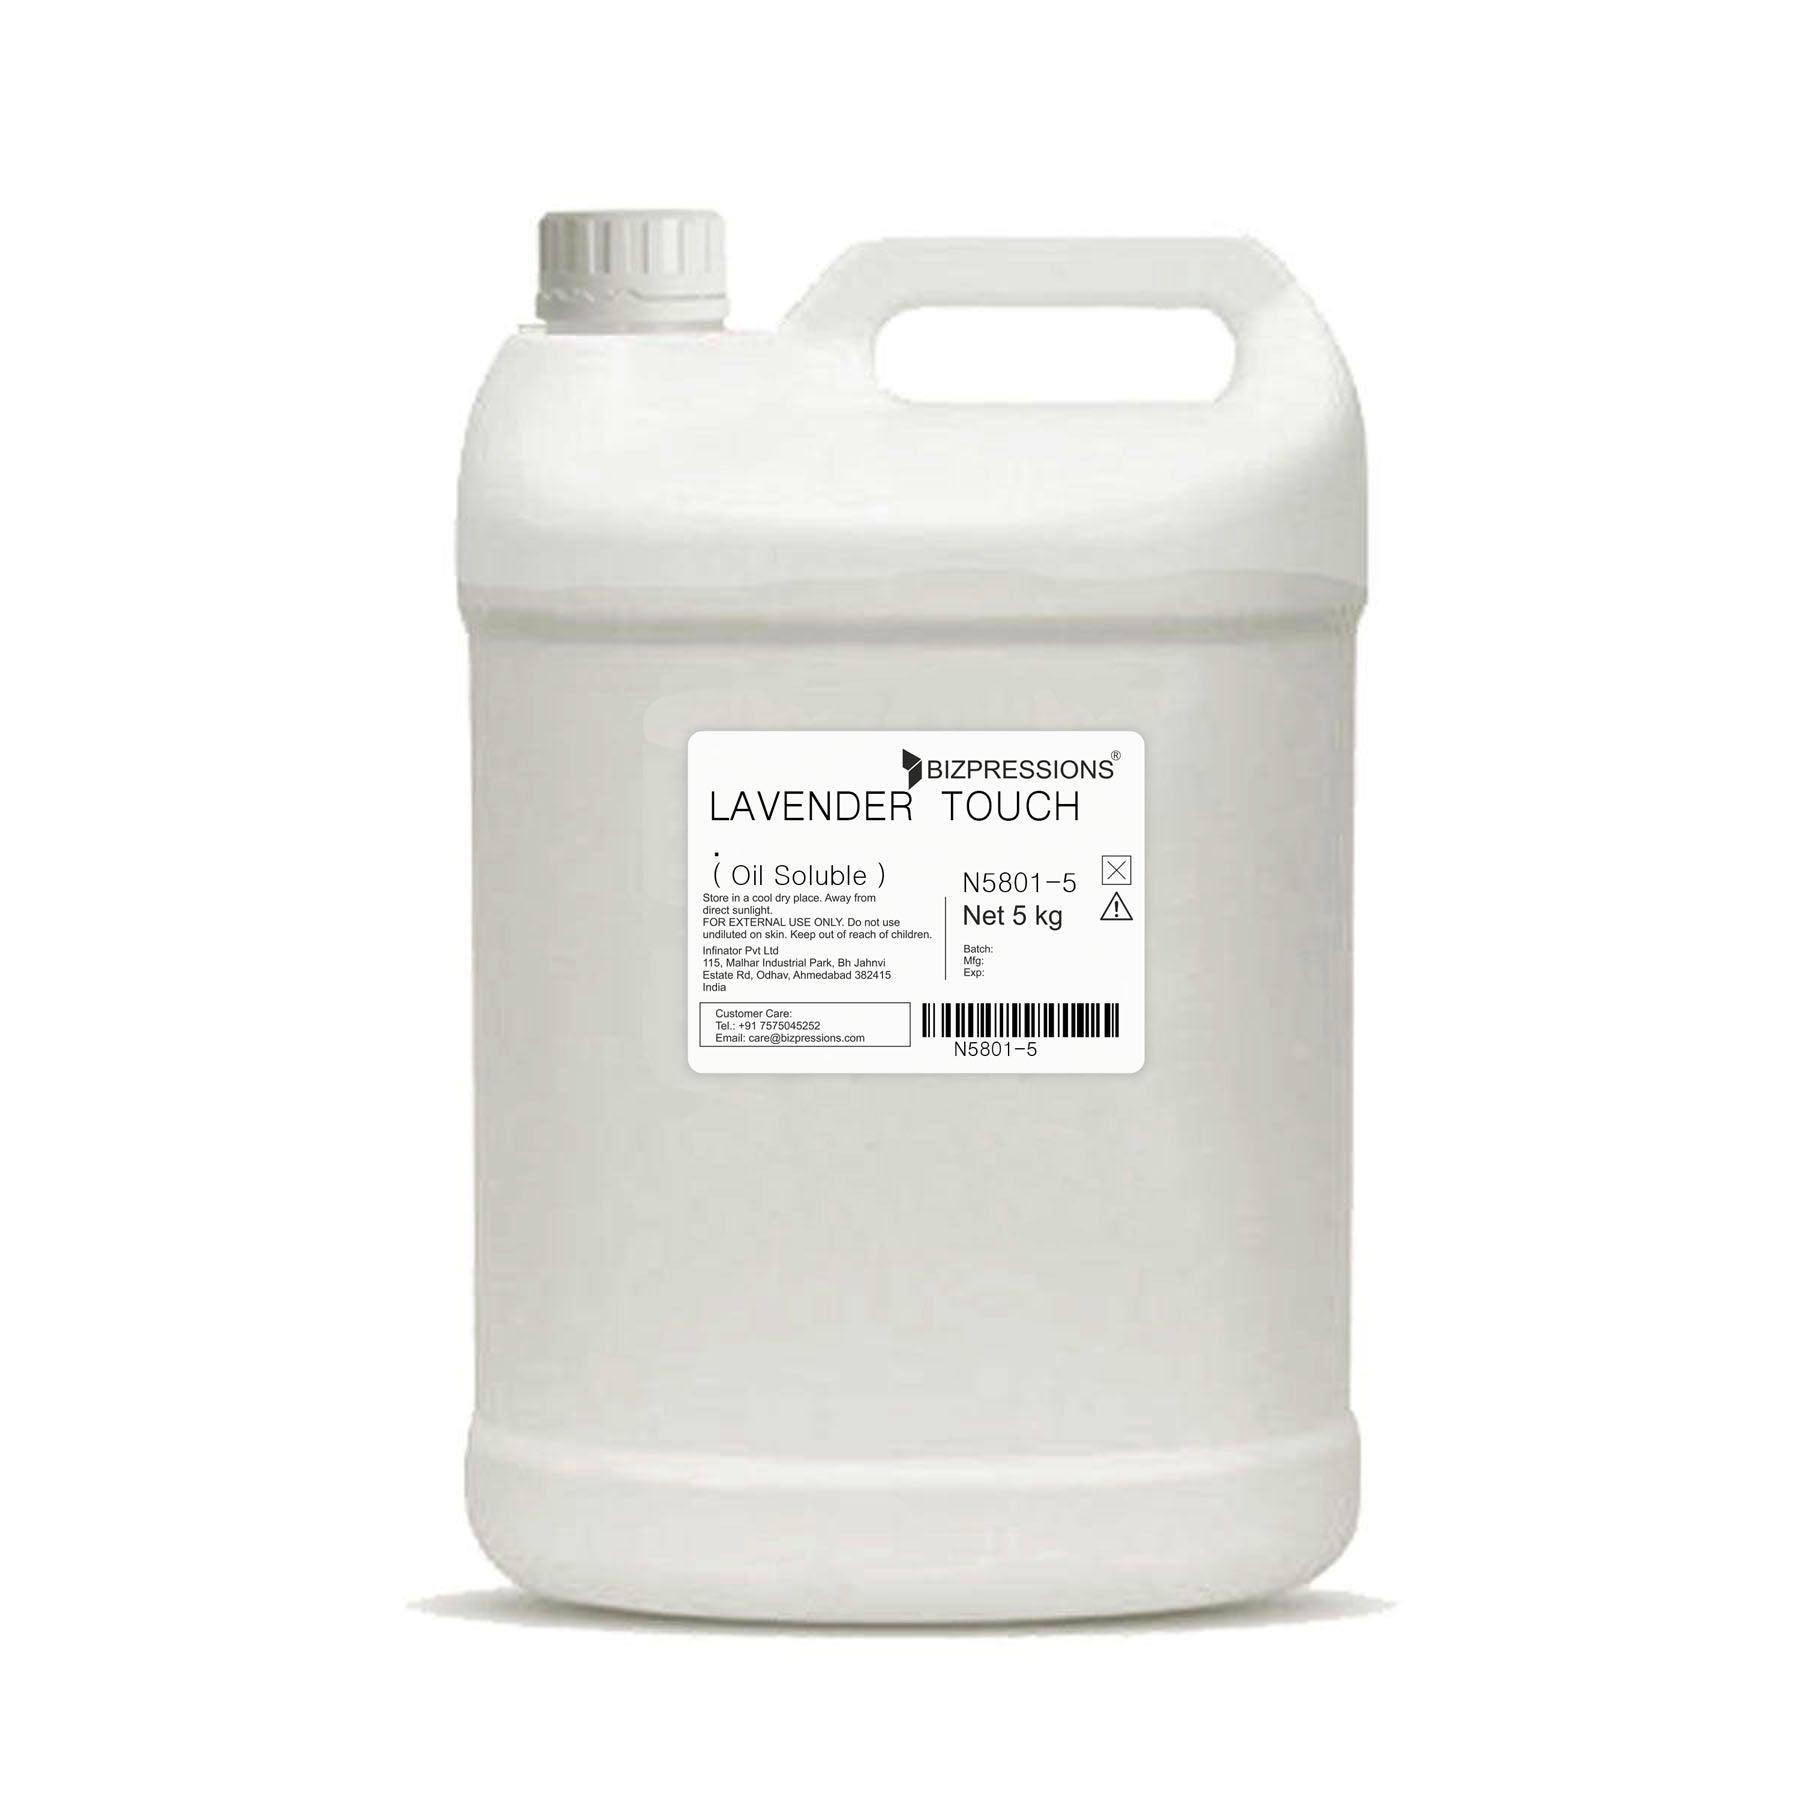 LAVENDER TOUCH - Fragrance ( Oil Soluble ) - 5 kg